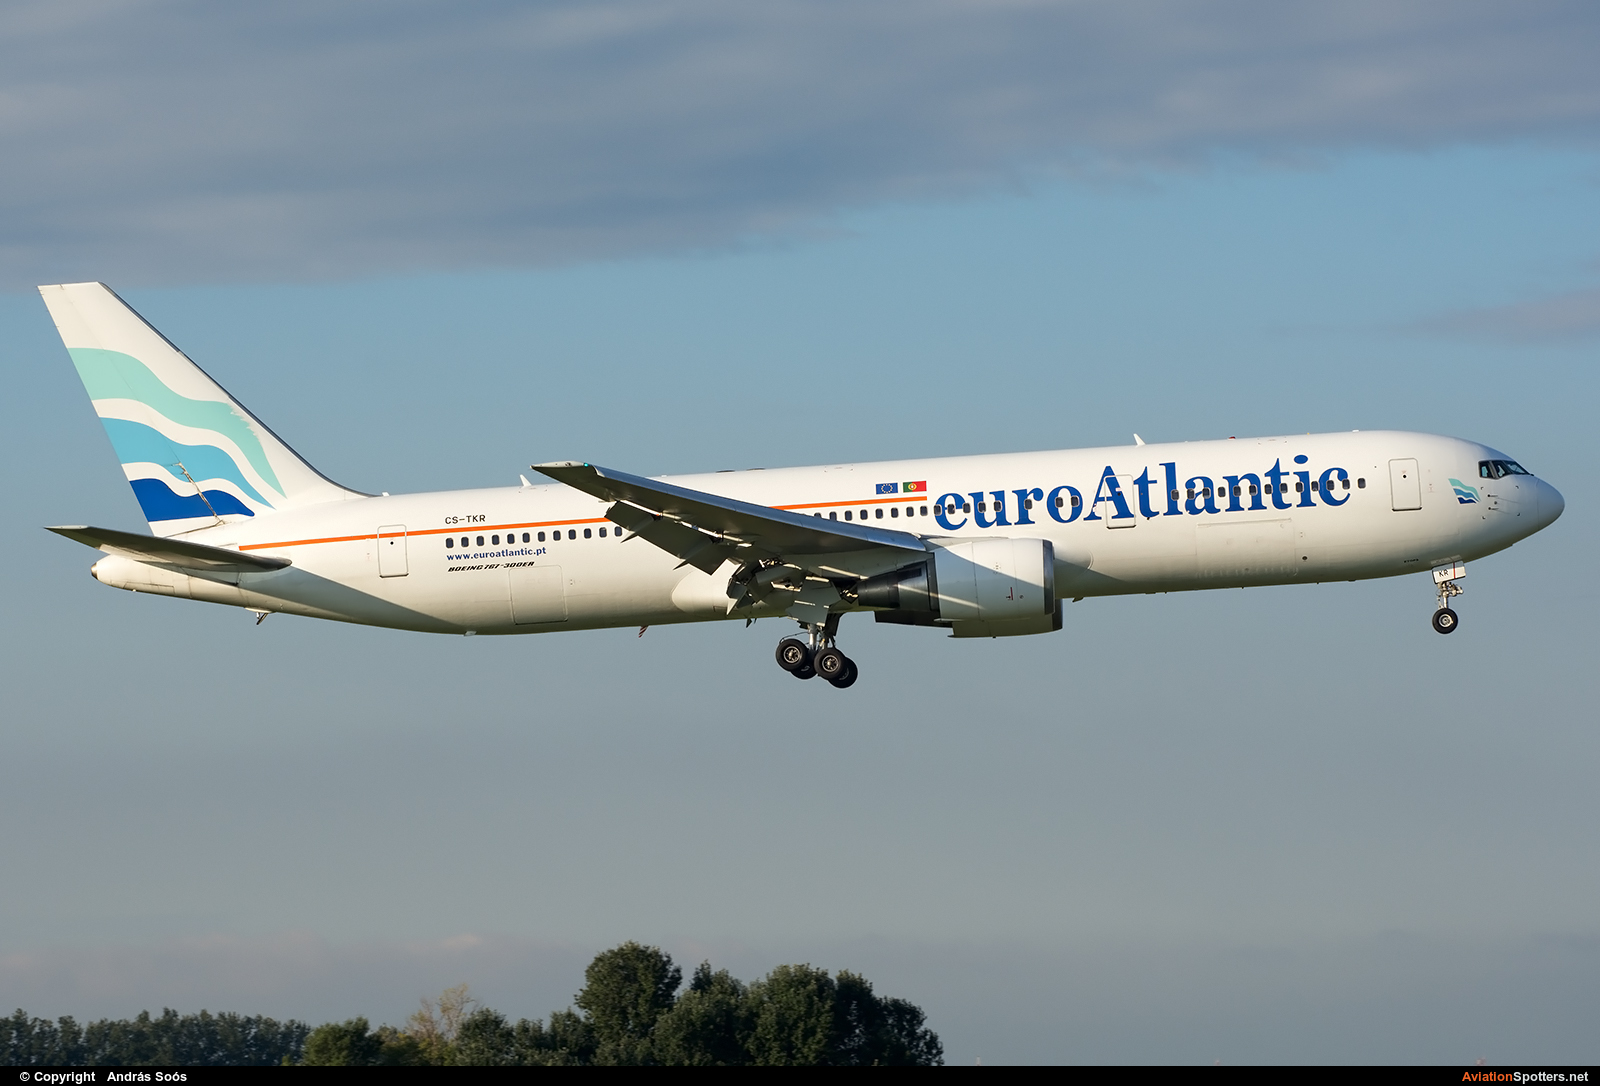 Euro Atlantic Airways  -  767-300  (CS-TKR) By András Soós (sas1965)